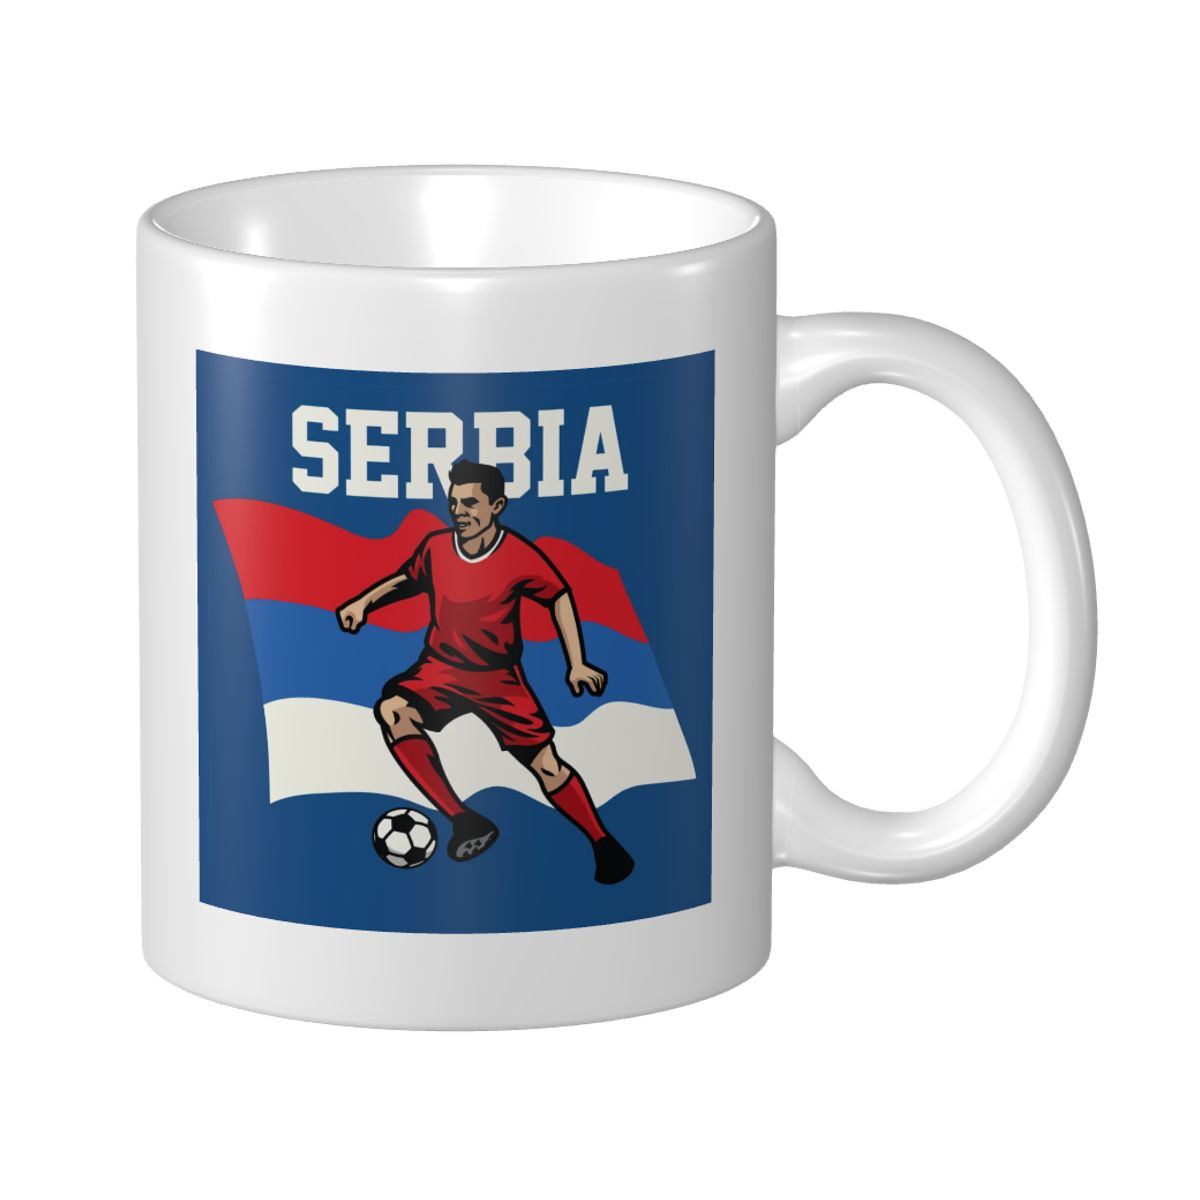 Serbia Soccer Player Ceramic Mug